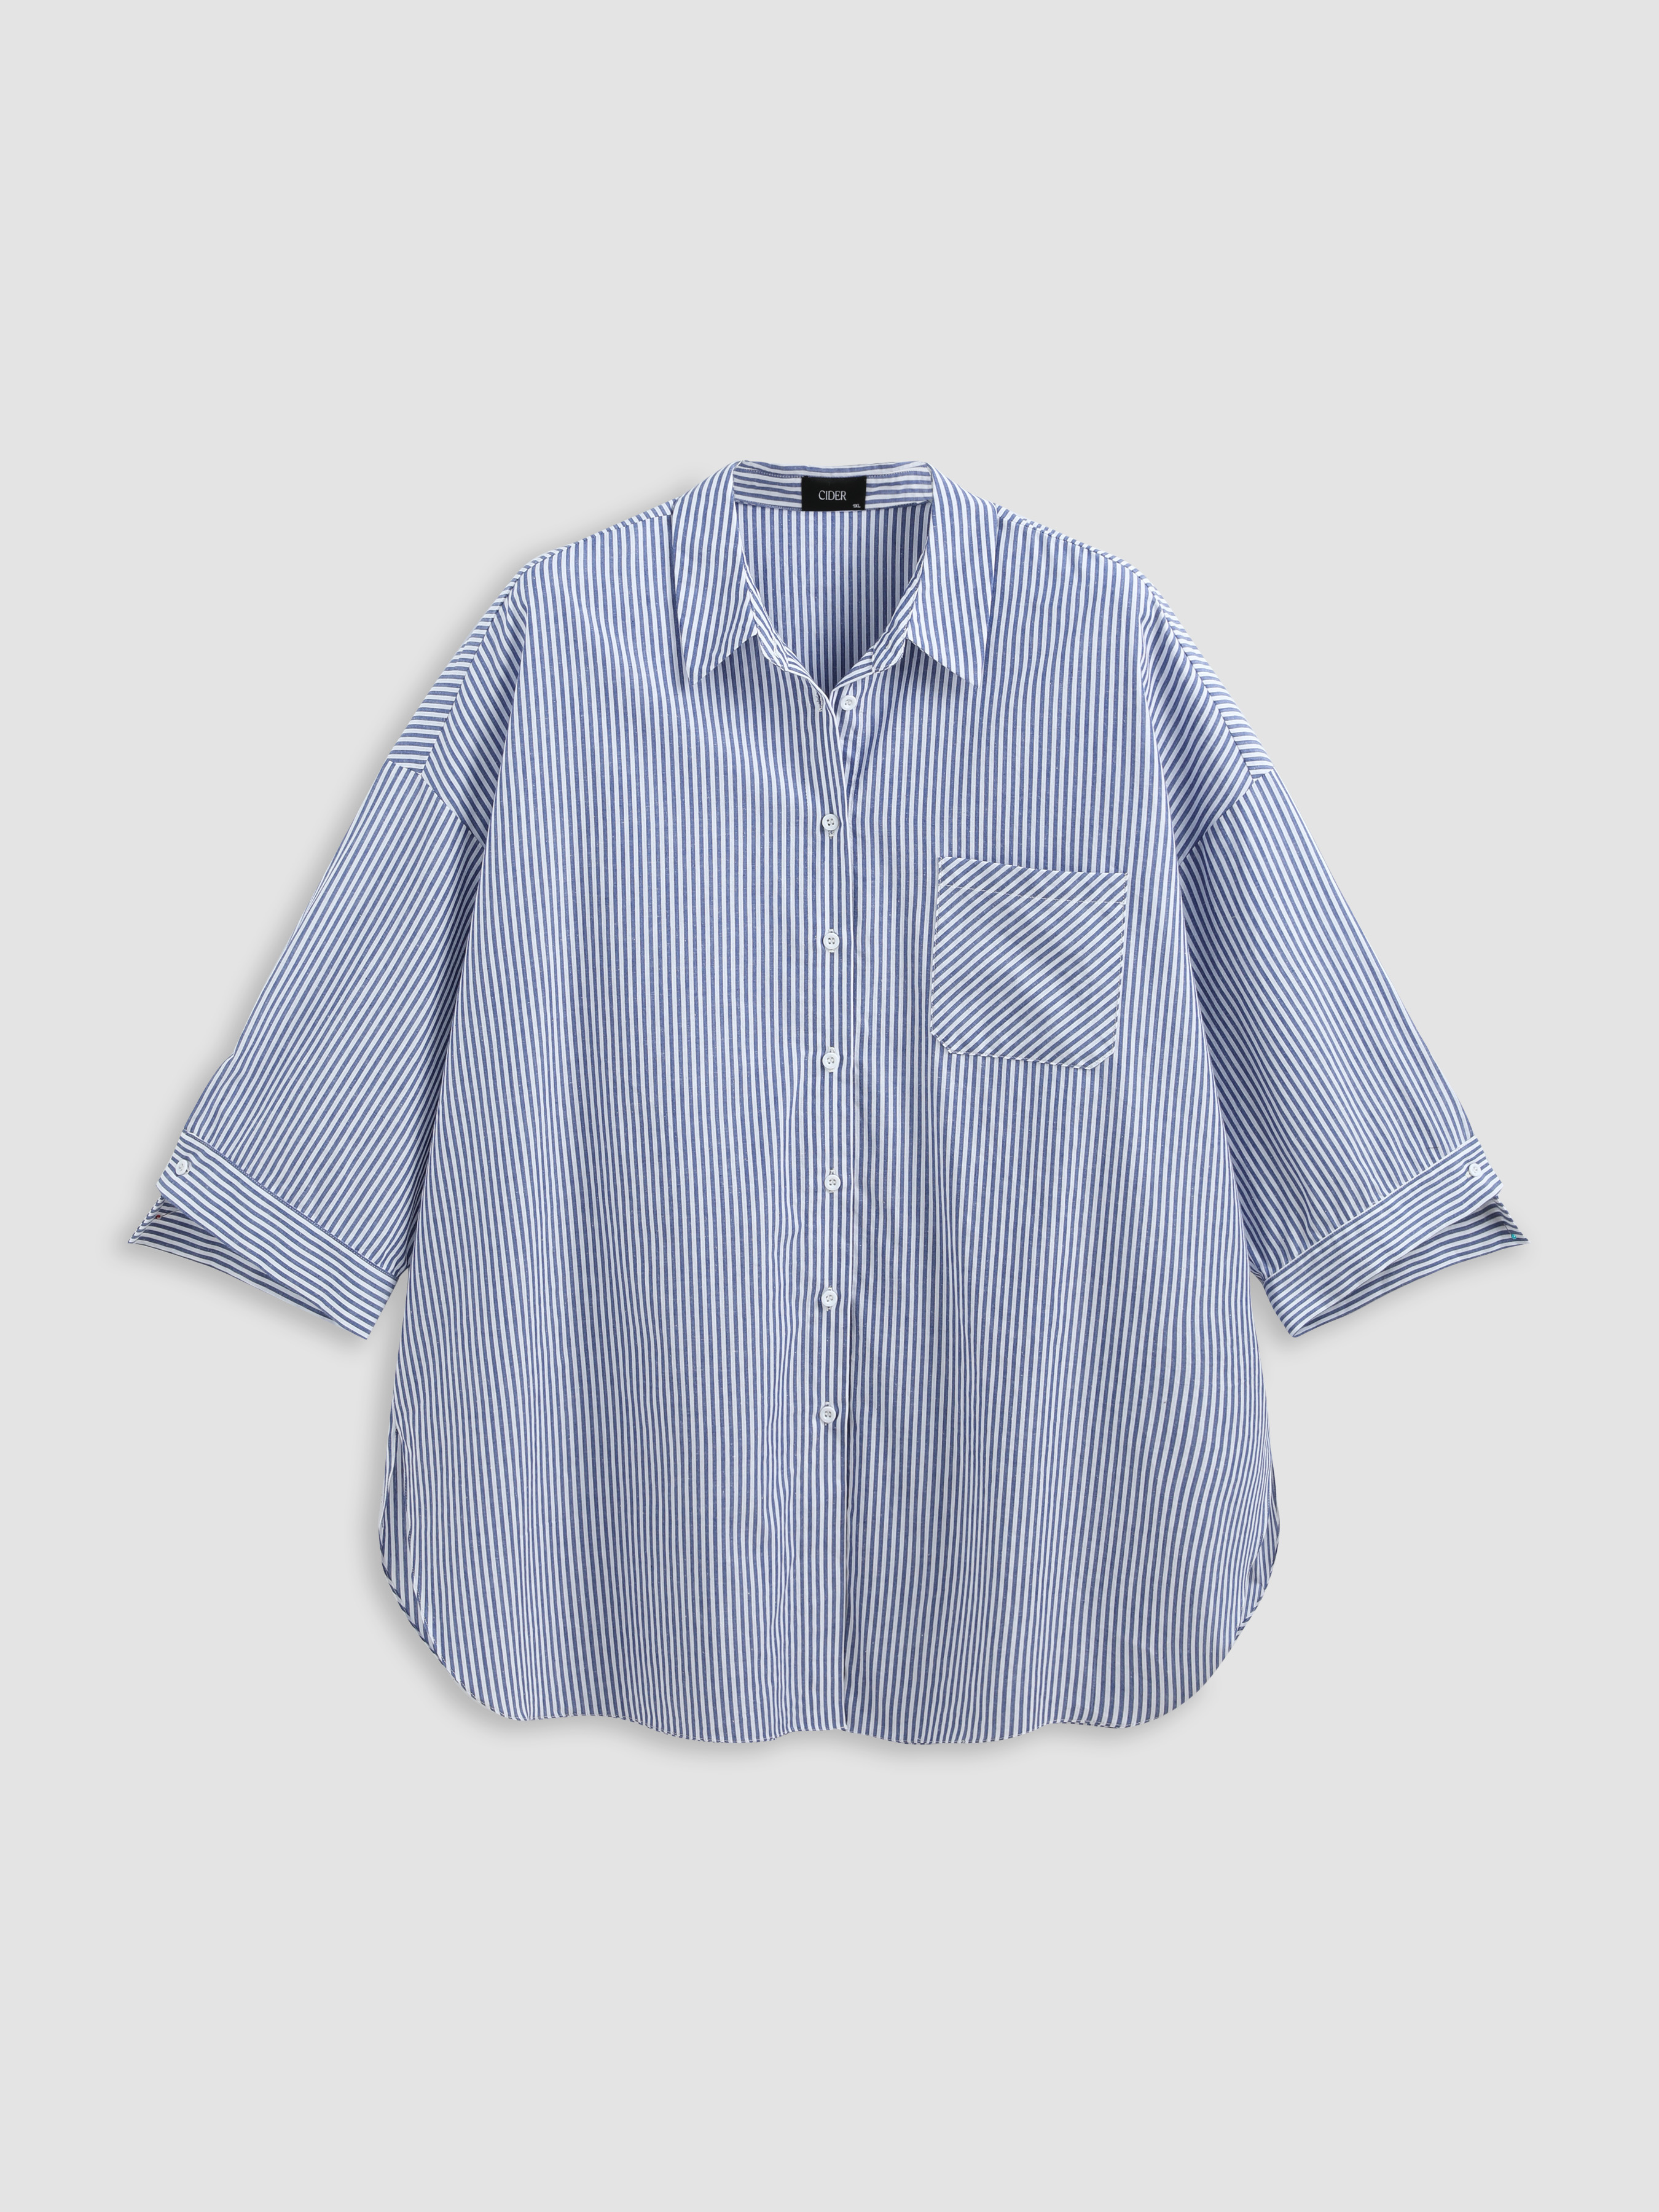 【PECO CLUB】カラーポケットオーバーシャツ